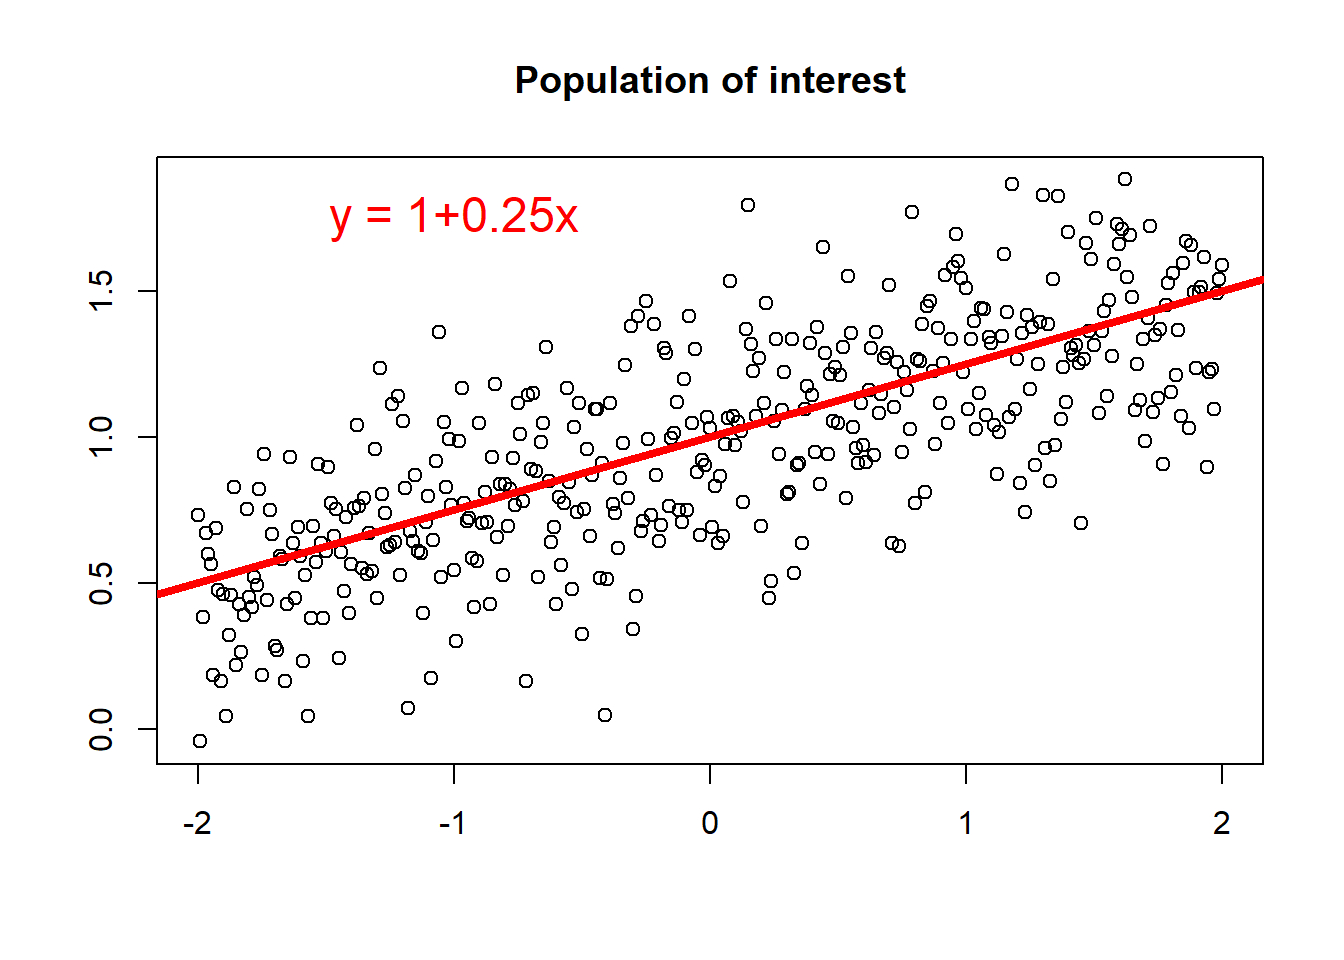 Figure a regression plot for illustration purposes